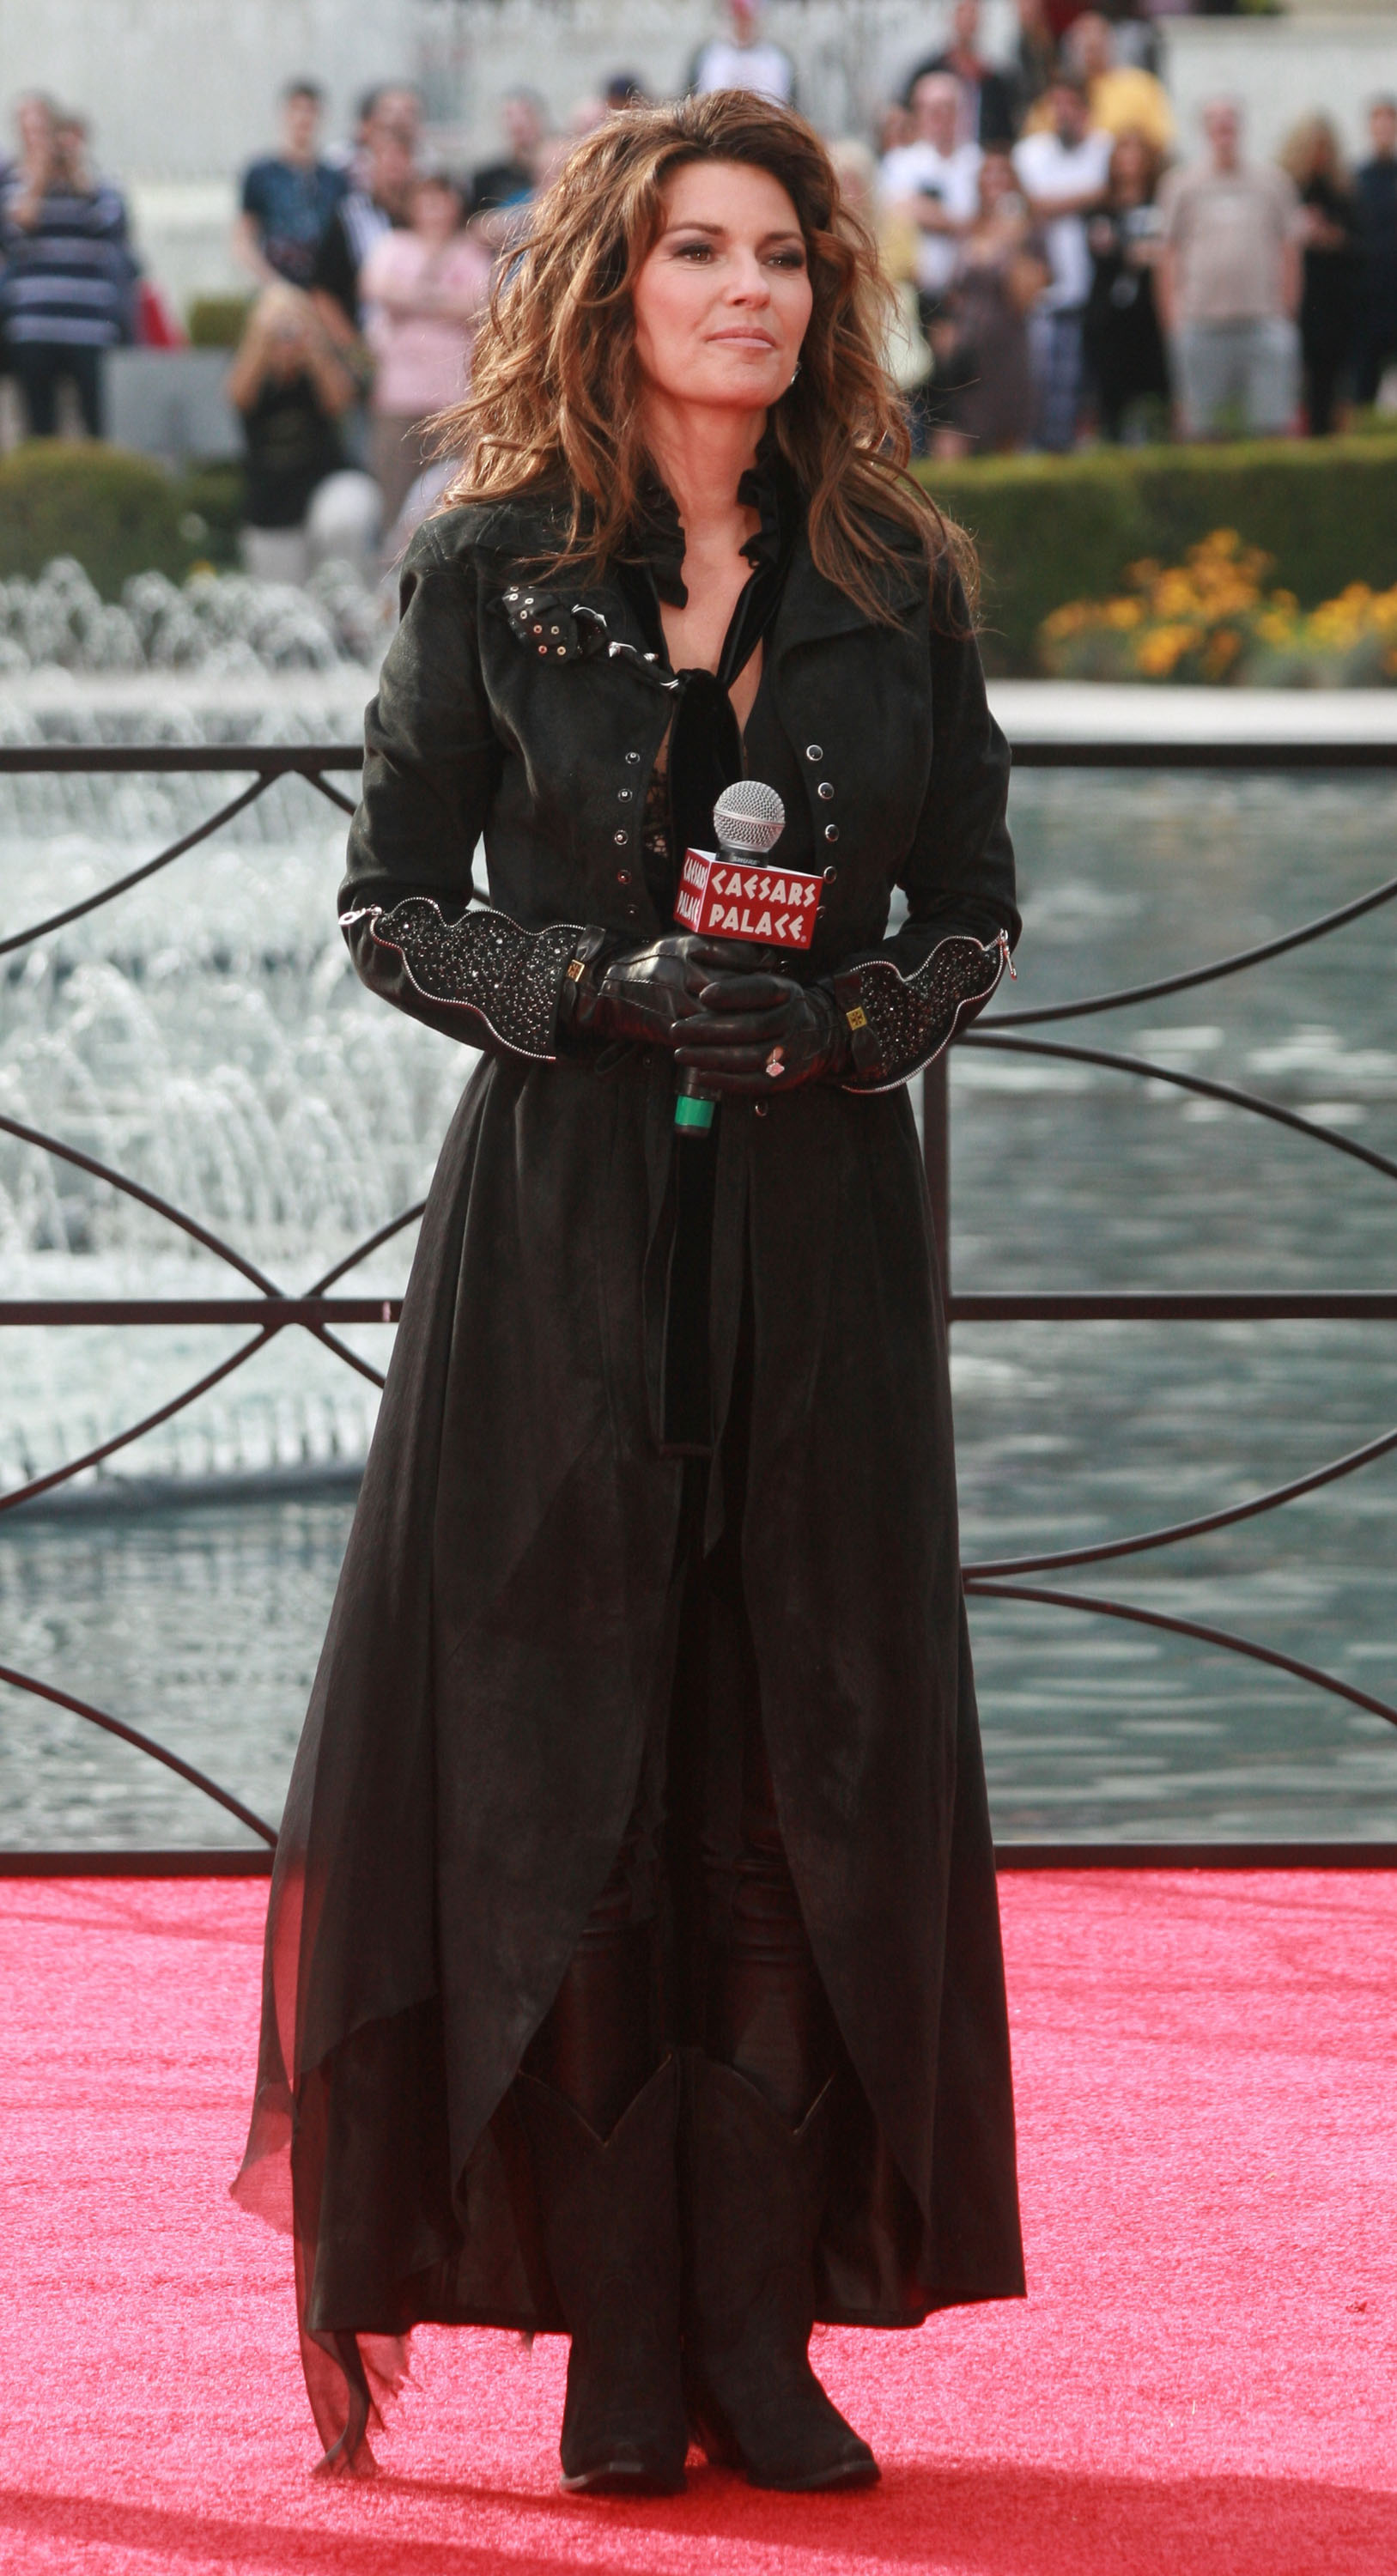 Shania Twain makes a grand entrance at Caesars Palace on November 14, 2012 in Las Vegas, Nevada. | Source: Getty Images